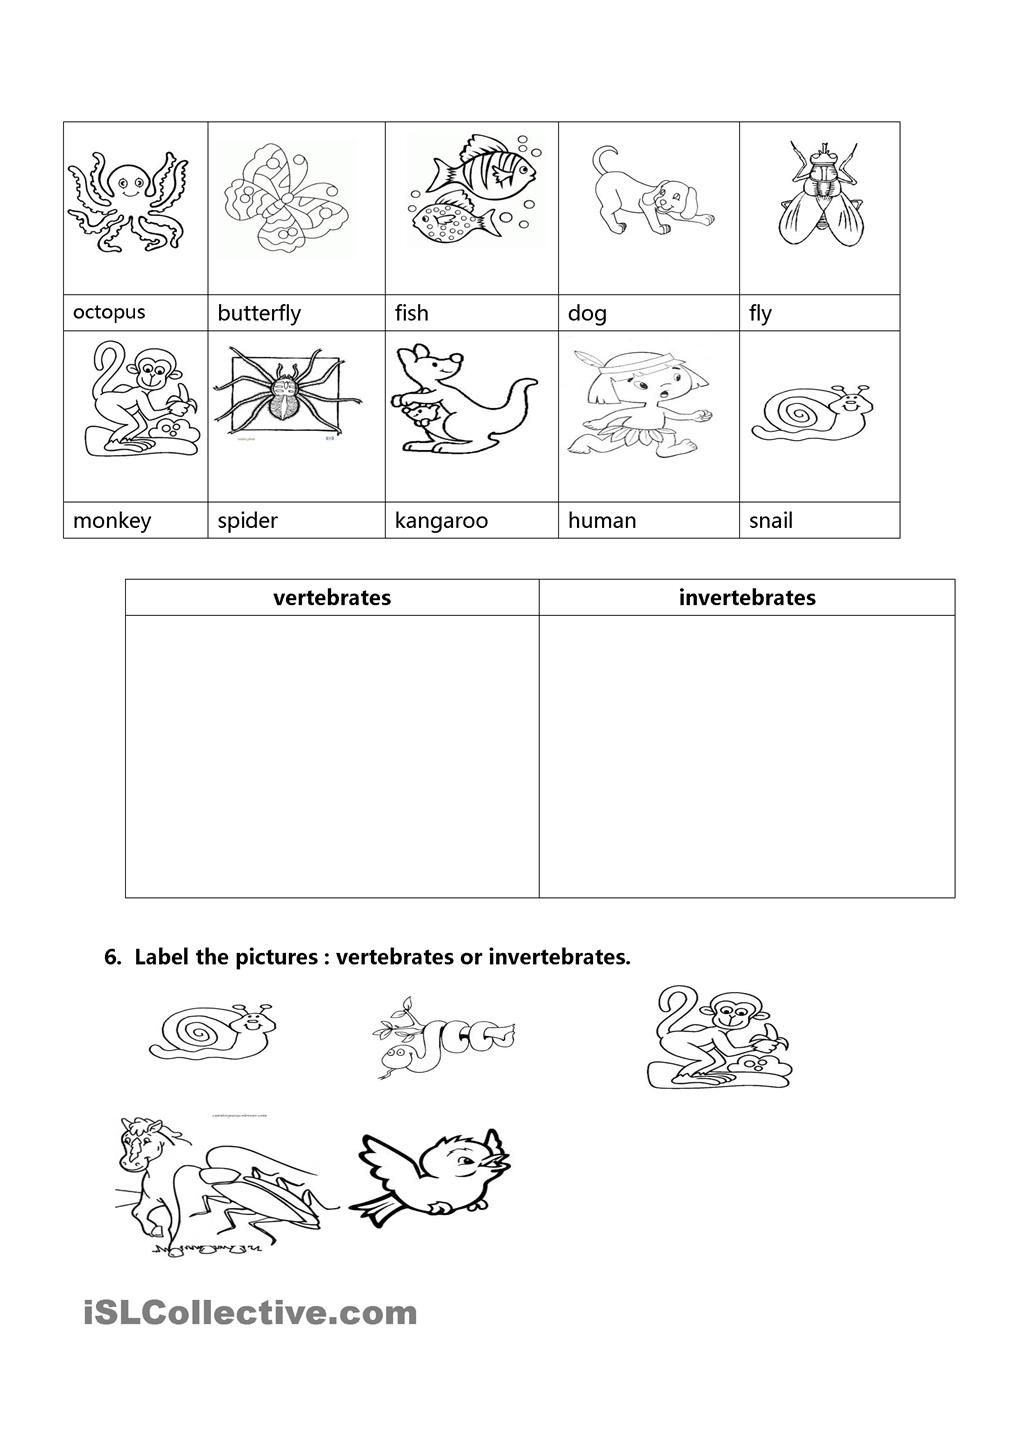 vertebrates and invertebrates worksheet